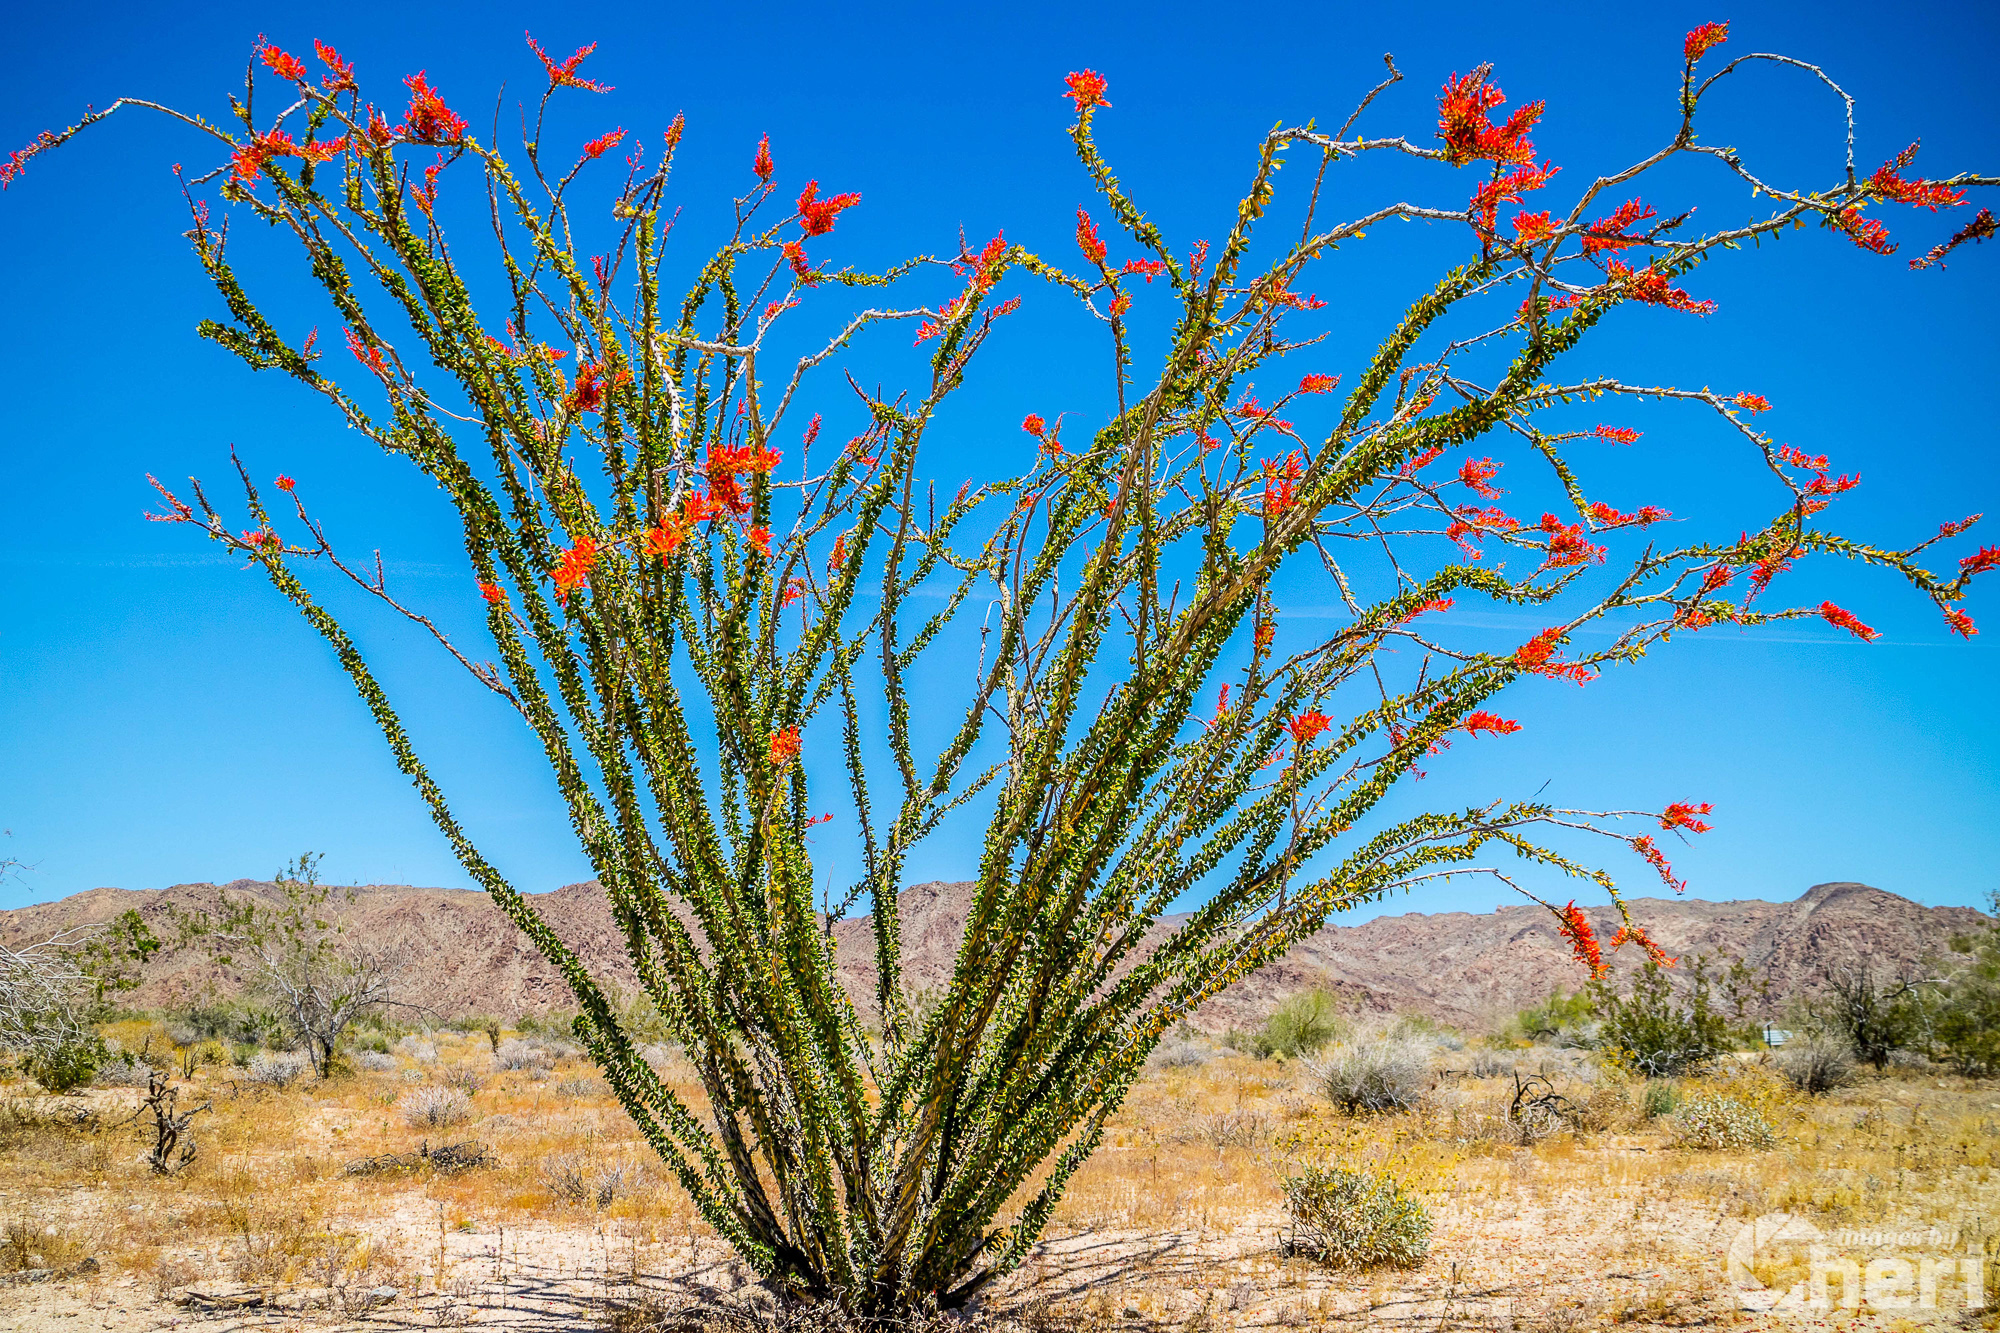 Even Sonoran Desert plants aren’t immune to climate change